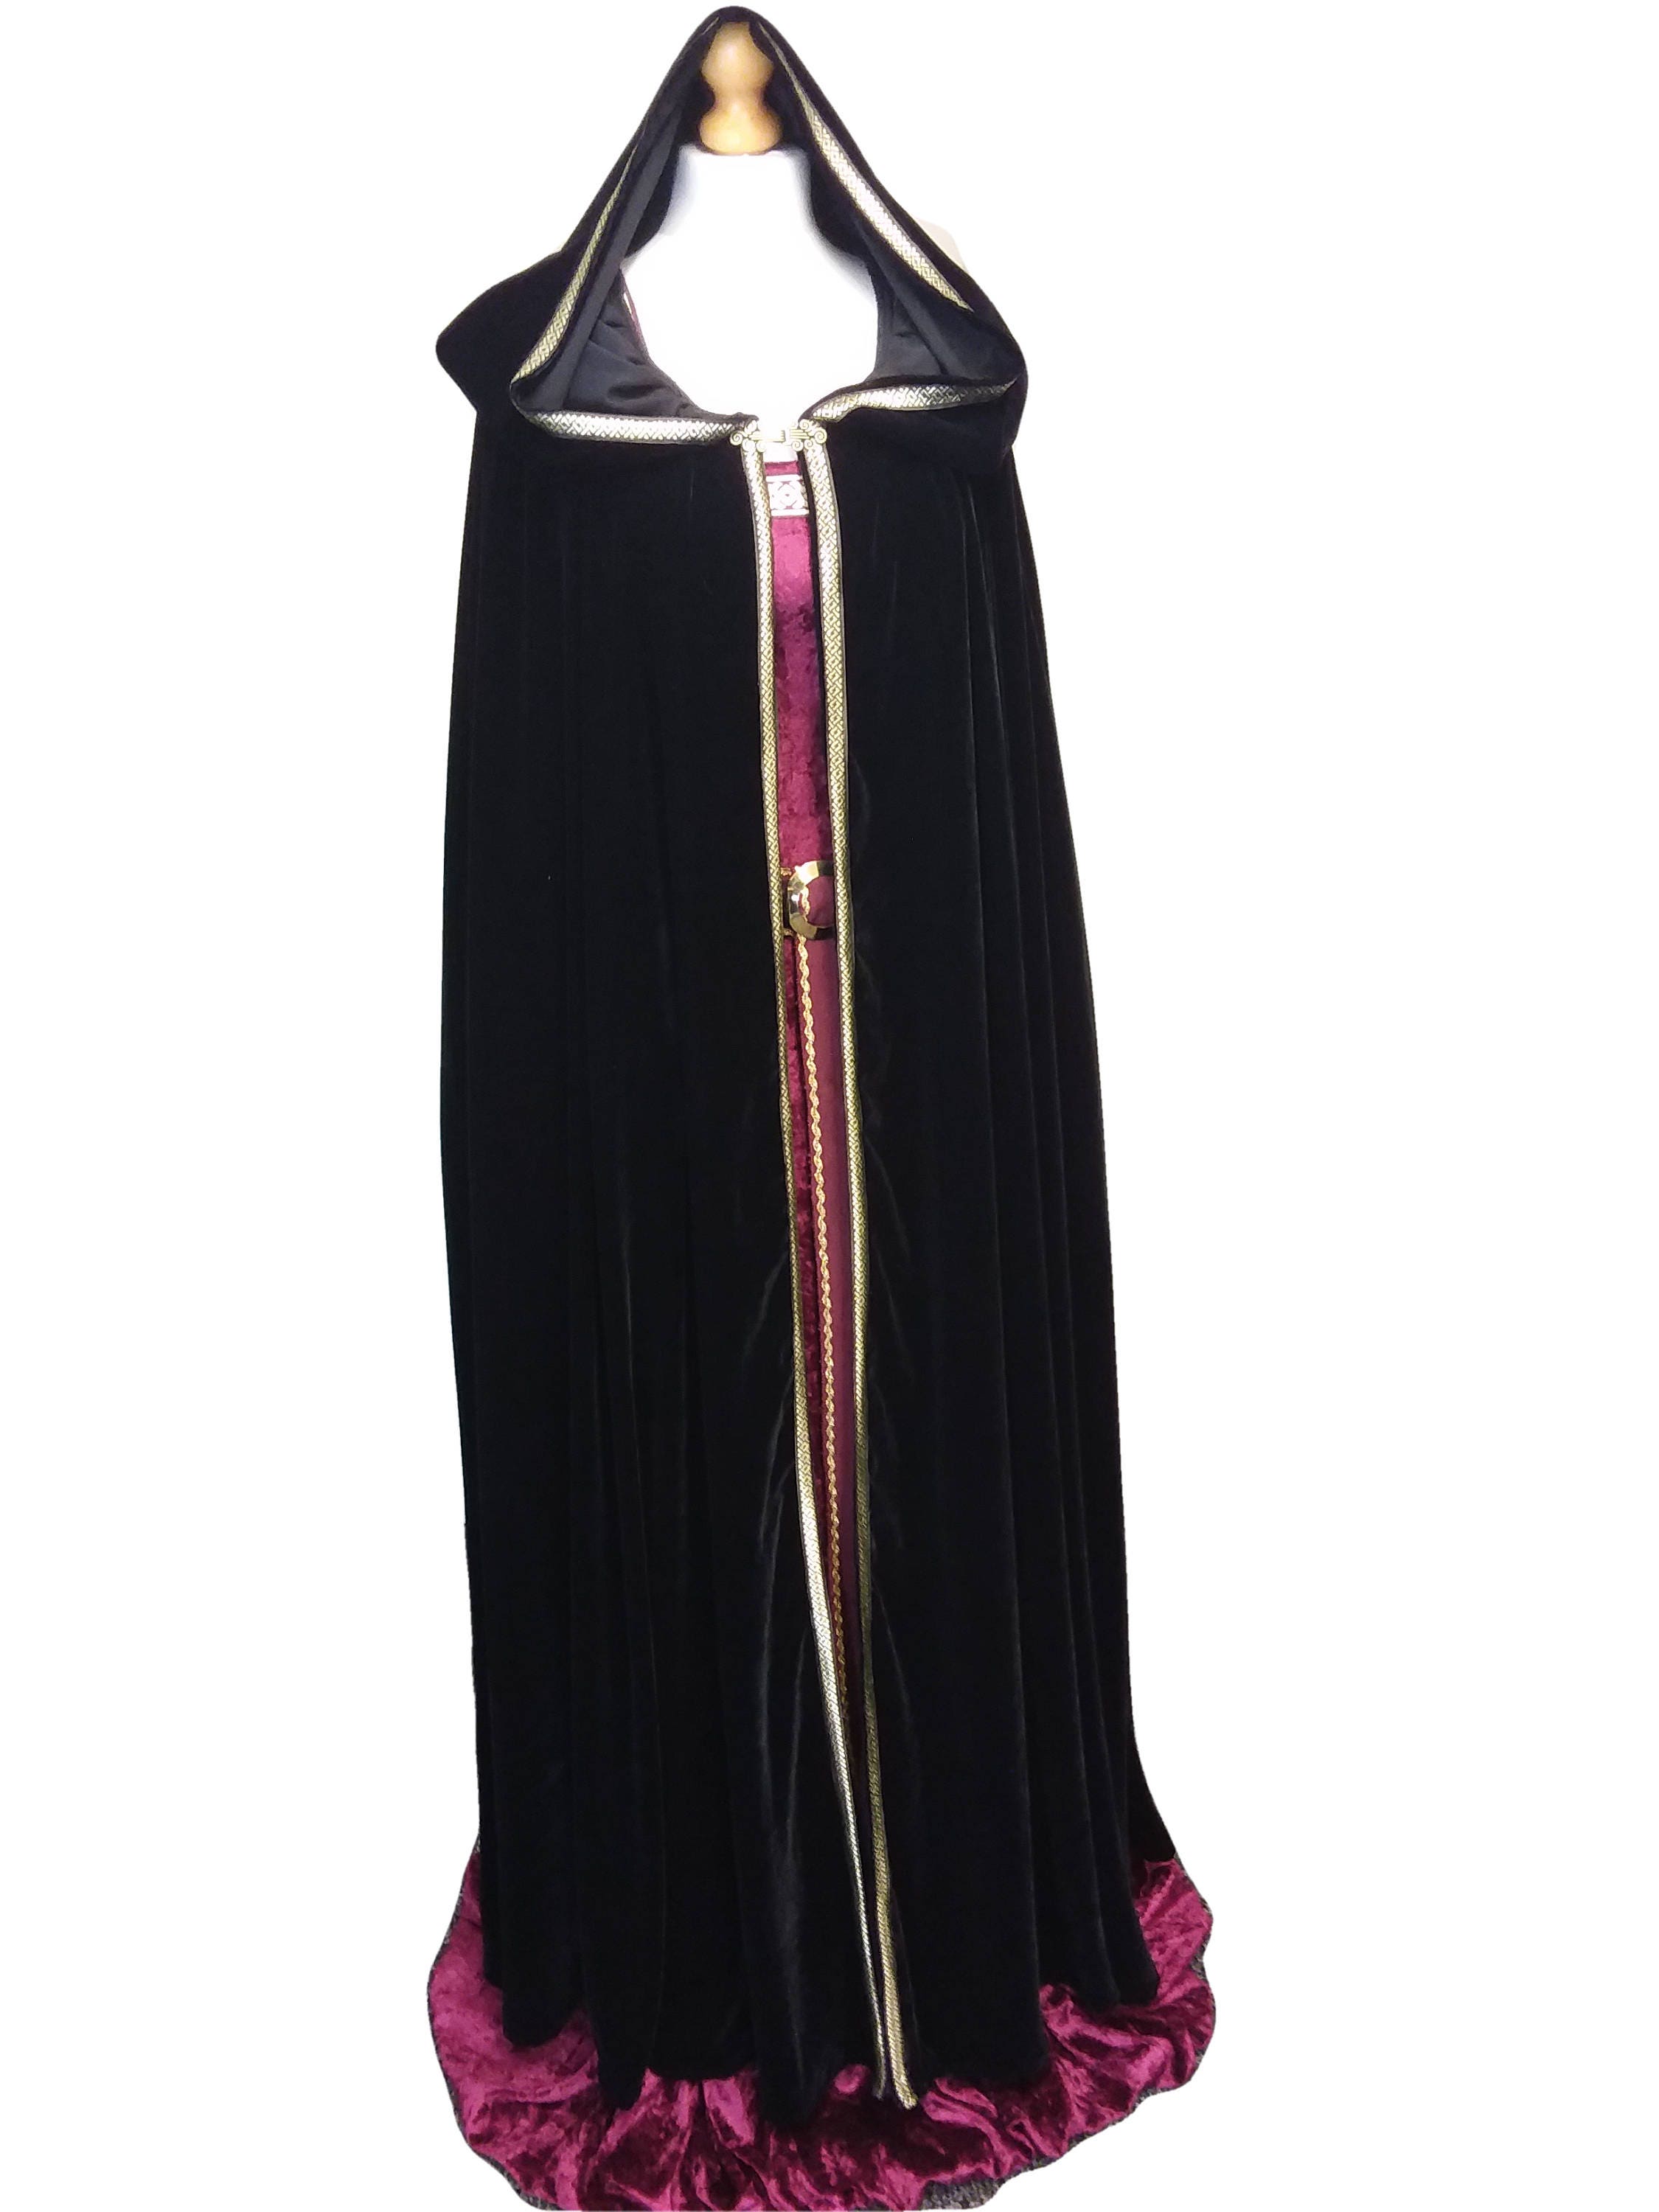 Mother gothel cape Scottish widow hood medieval cloak